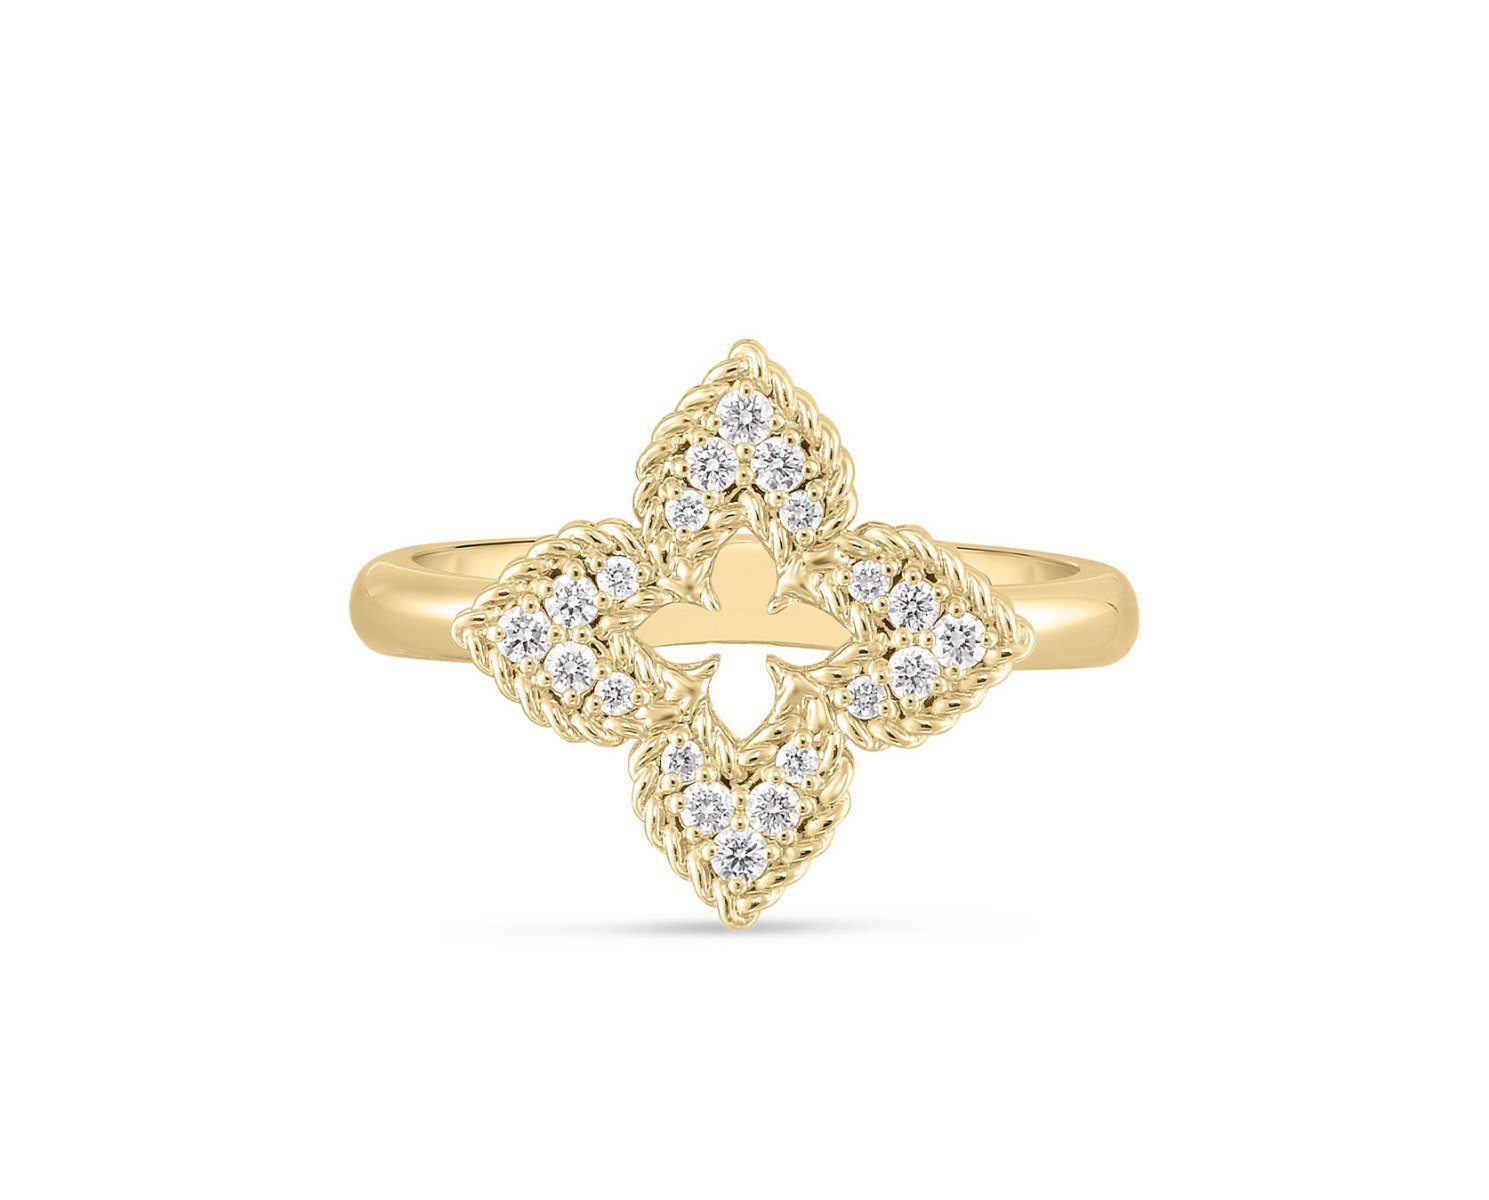 Roberto Coin “Venetian Princess” 18kt Yellow Gold Diamond Floral Ring